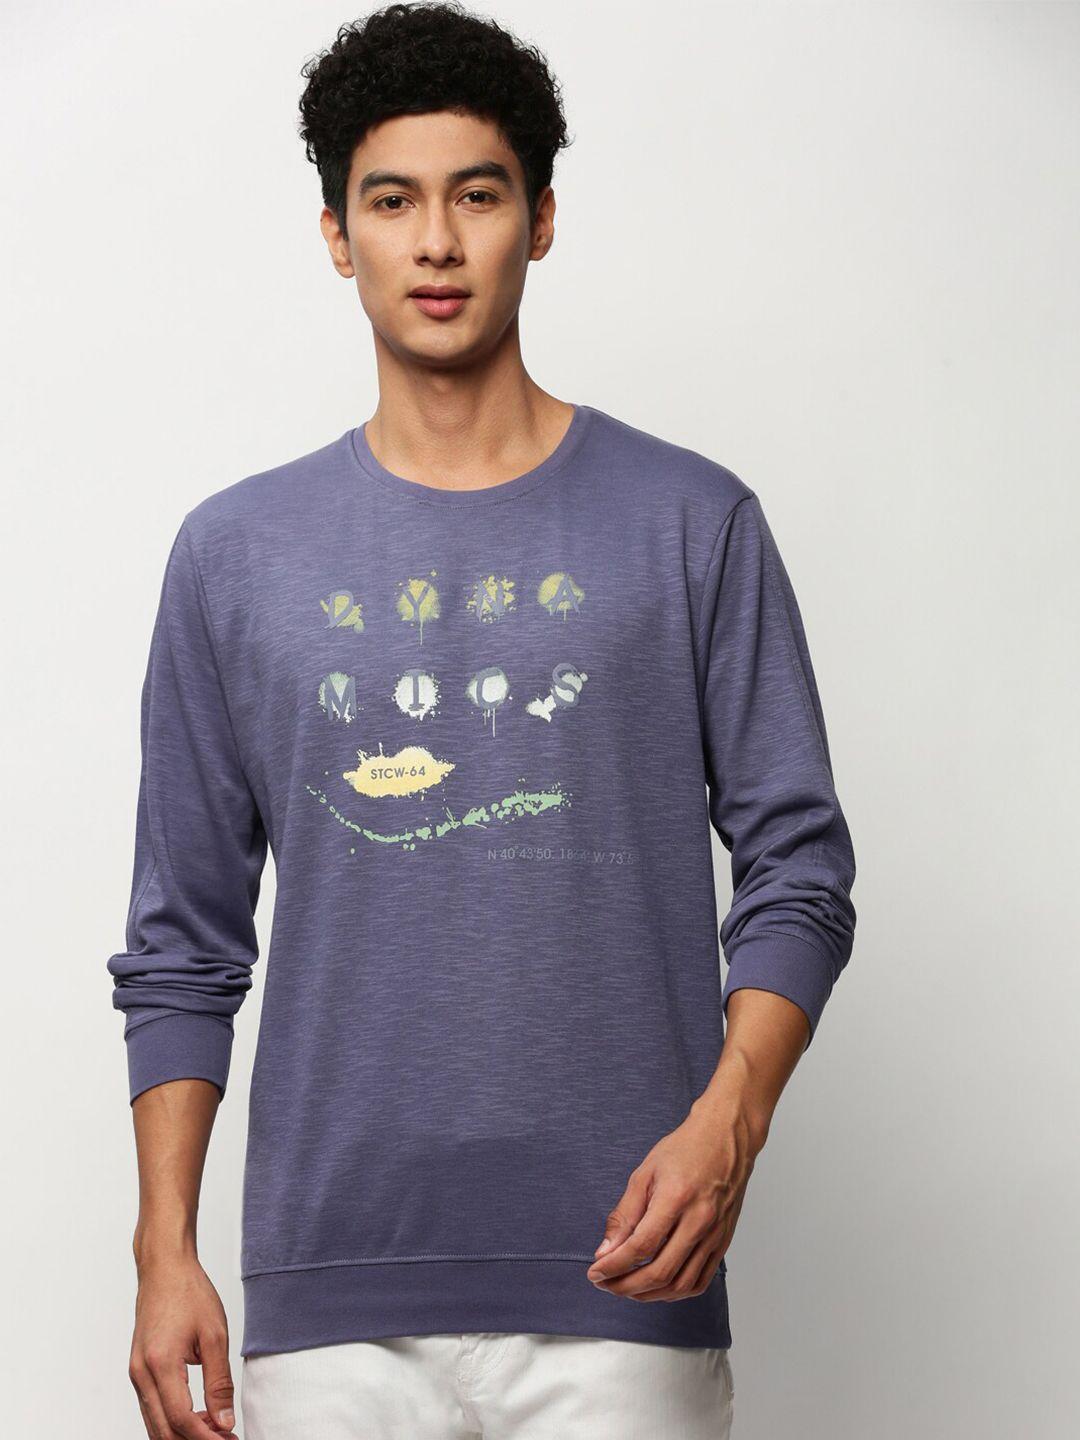 showoff typography printed cotton sweatshirt